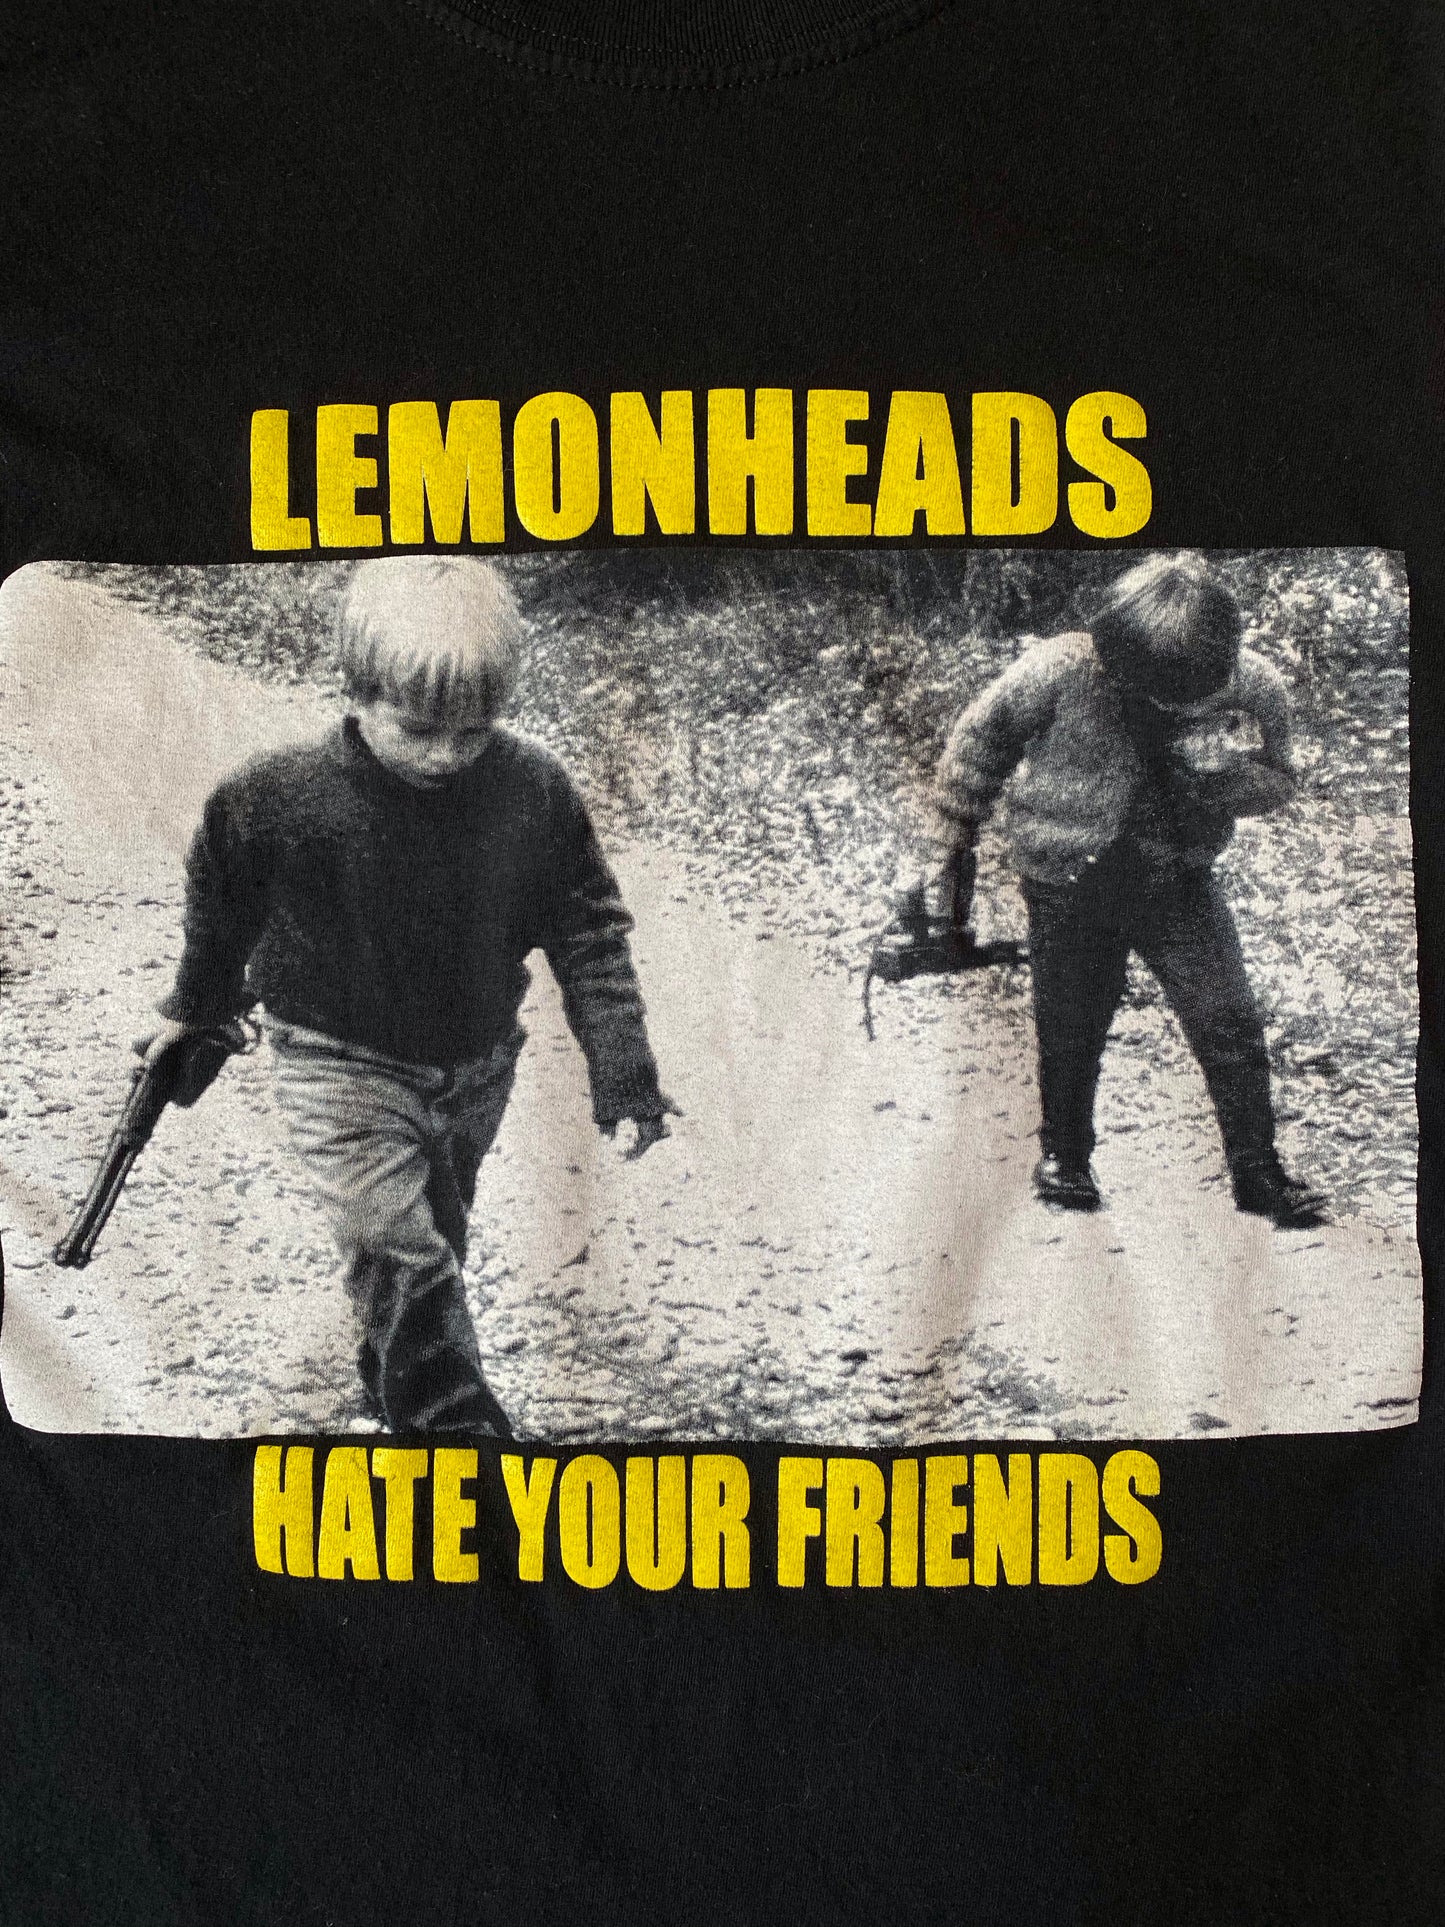 Lemonheads “Hate Your Friends” Shirt